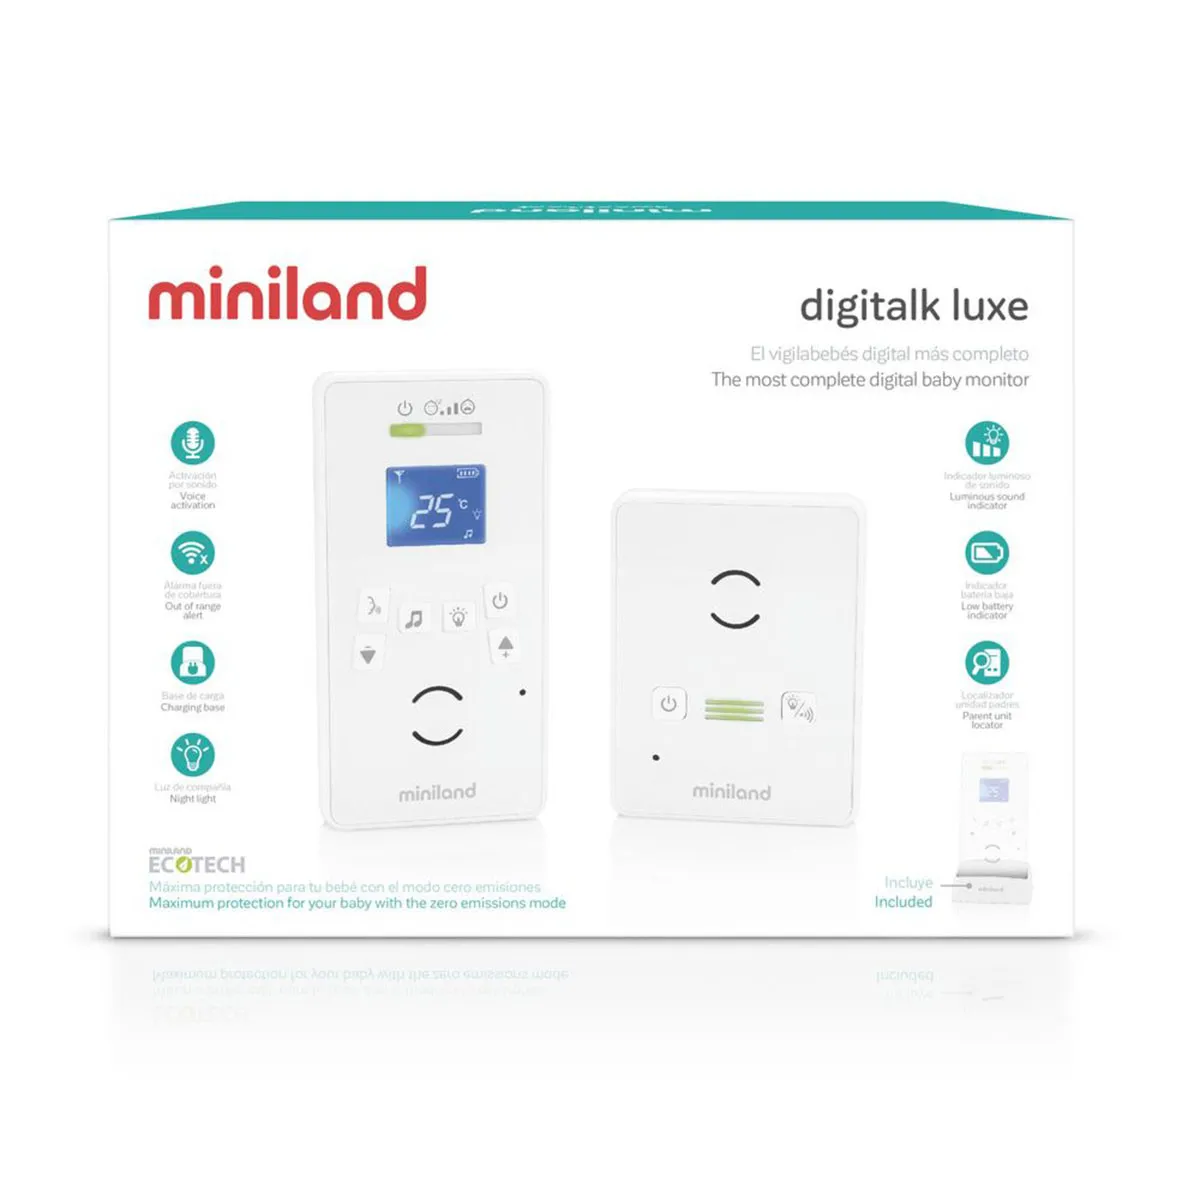 Miniland bebi alarm digitalk luxe